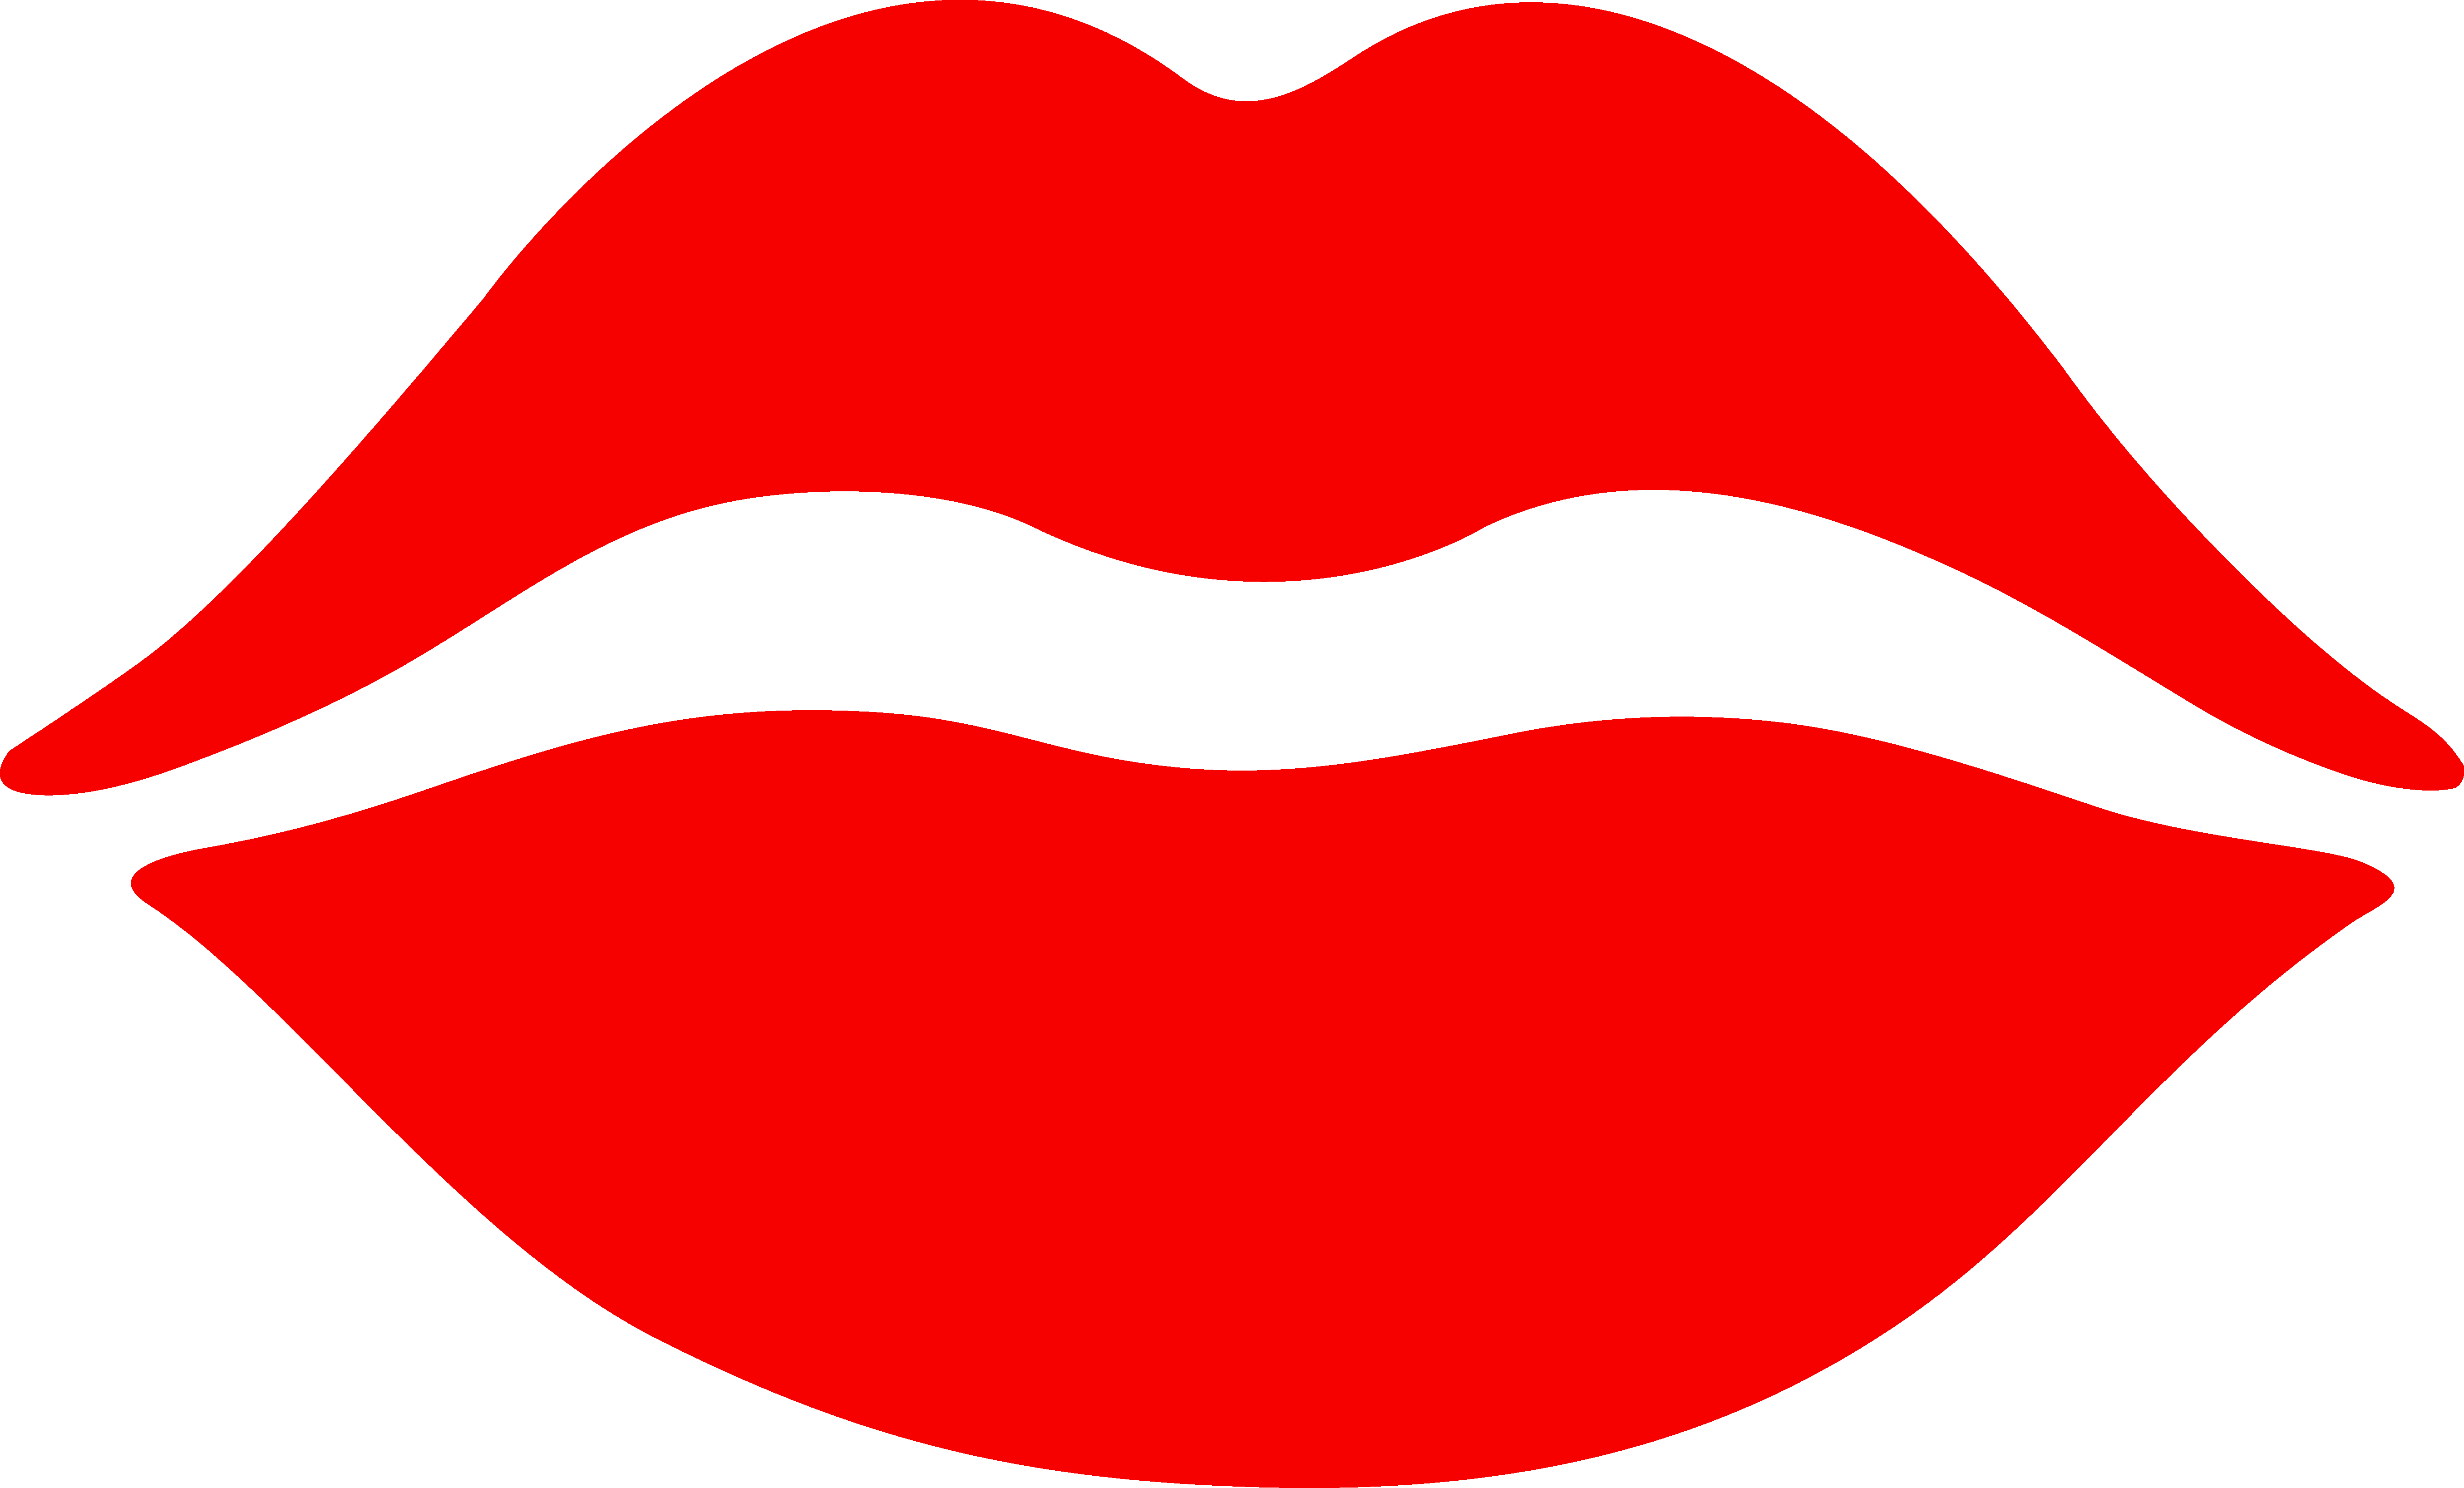 Red Lips Clip Art Image Close